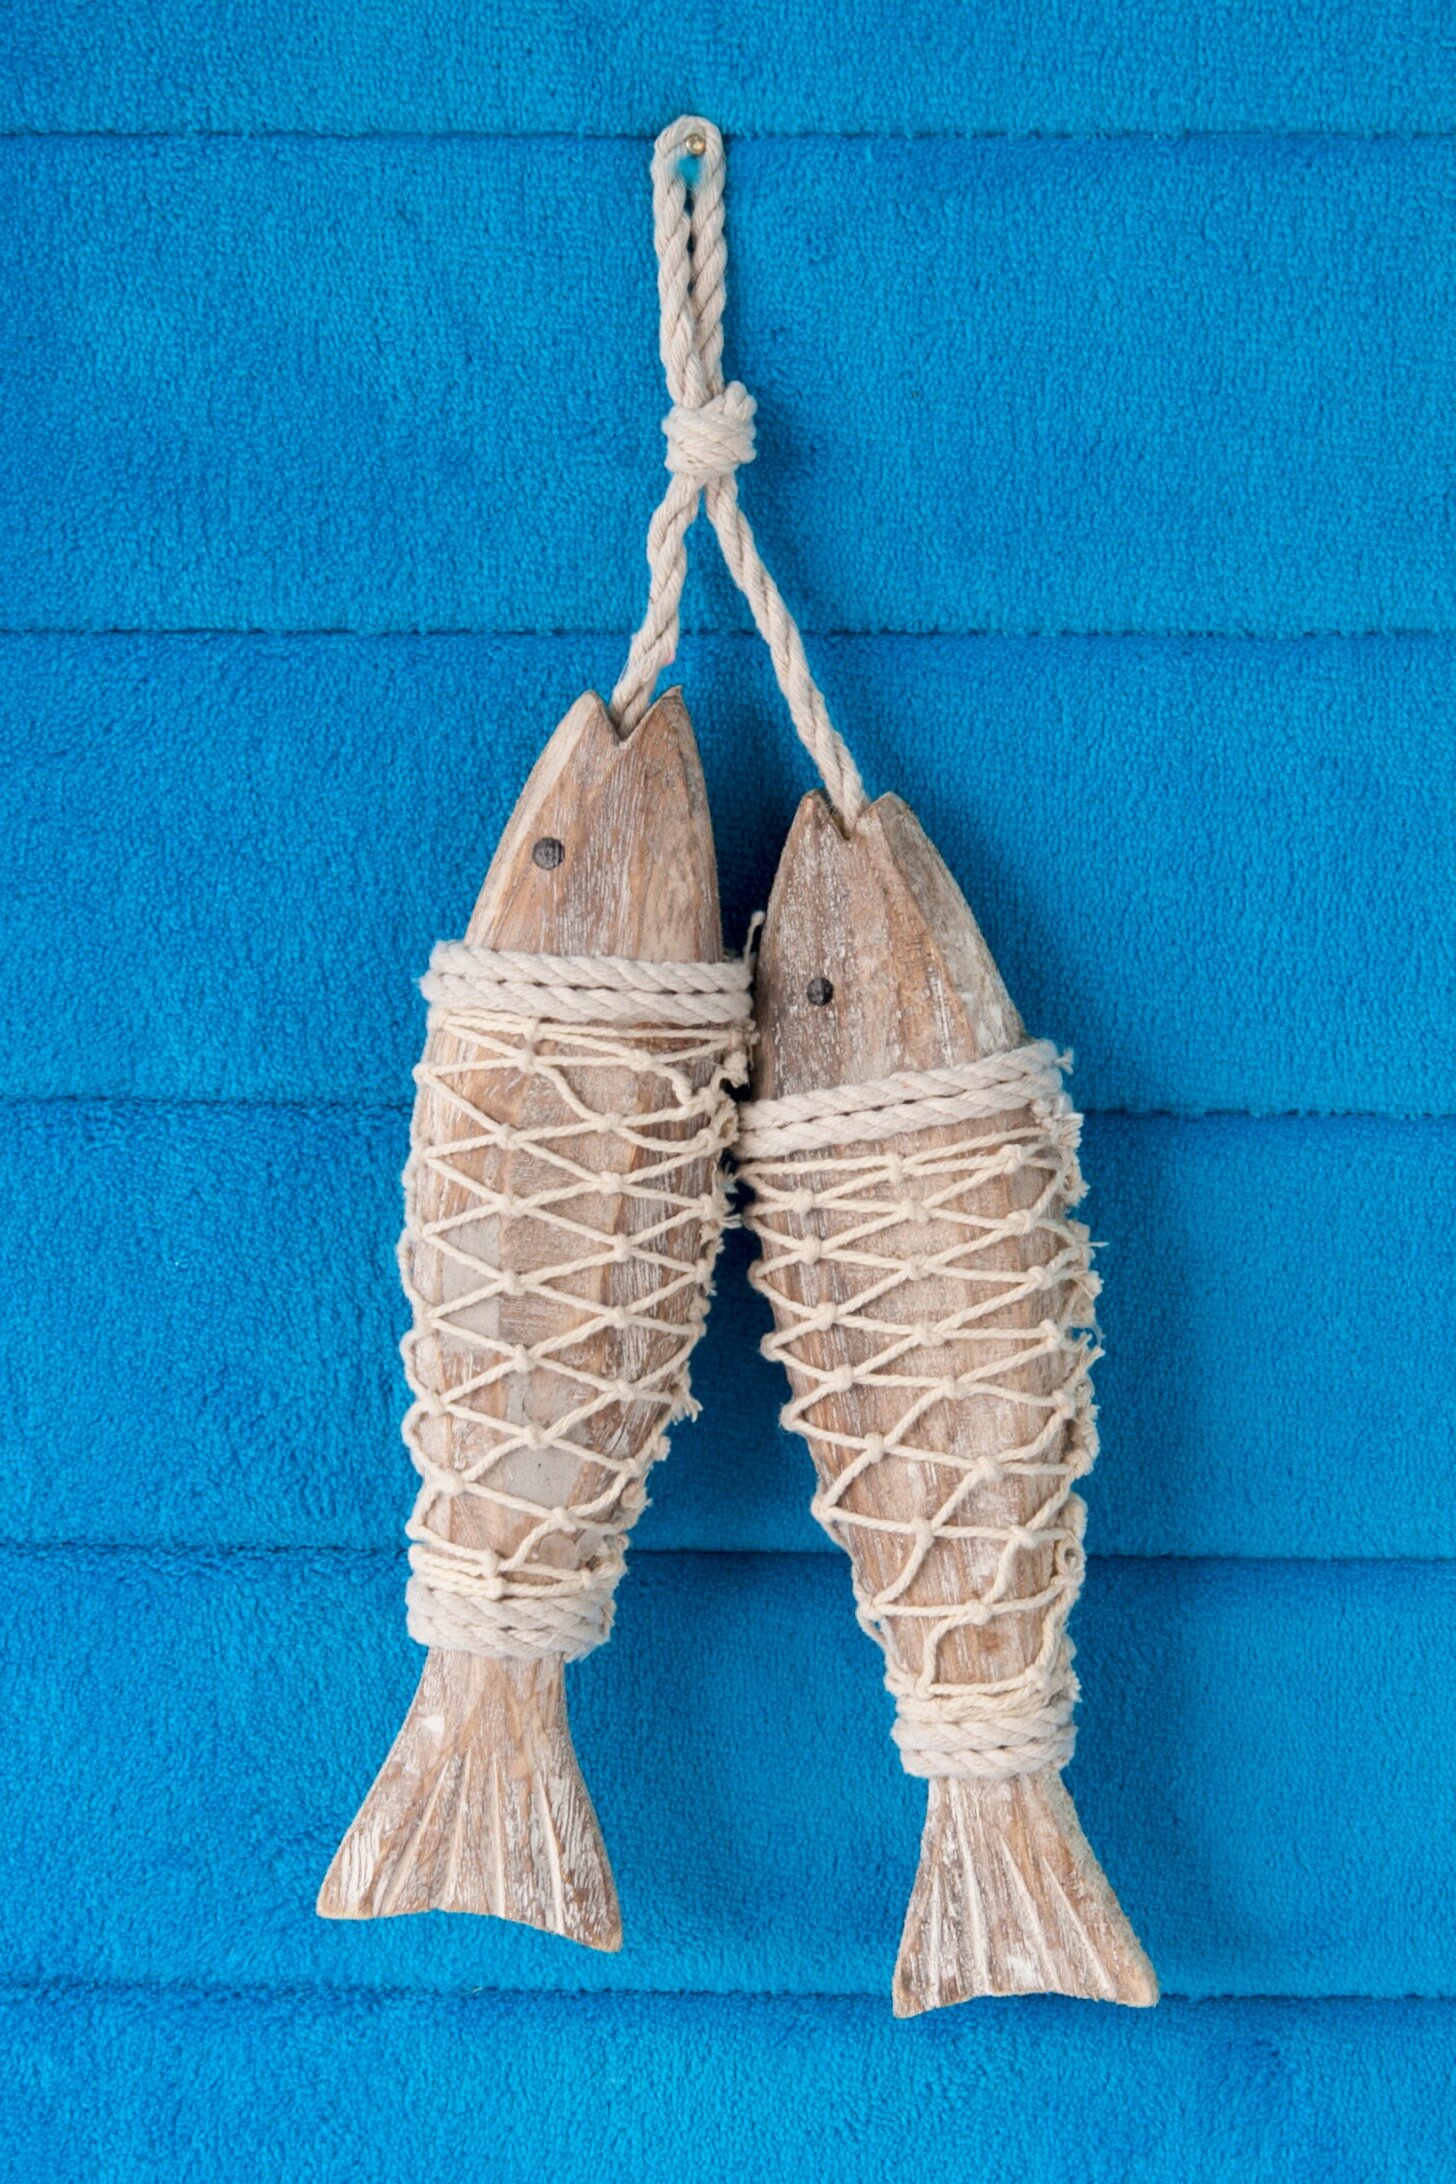 Handmade Cotton Fish Net Decoration Nautical Netting Wall